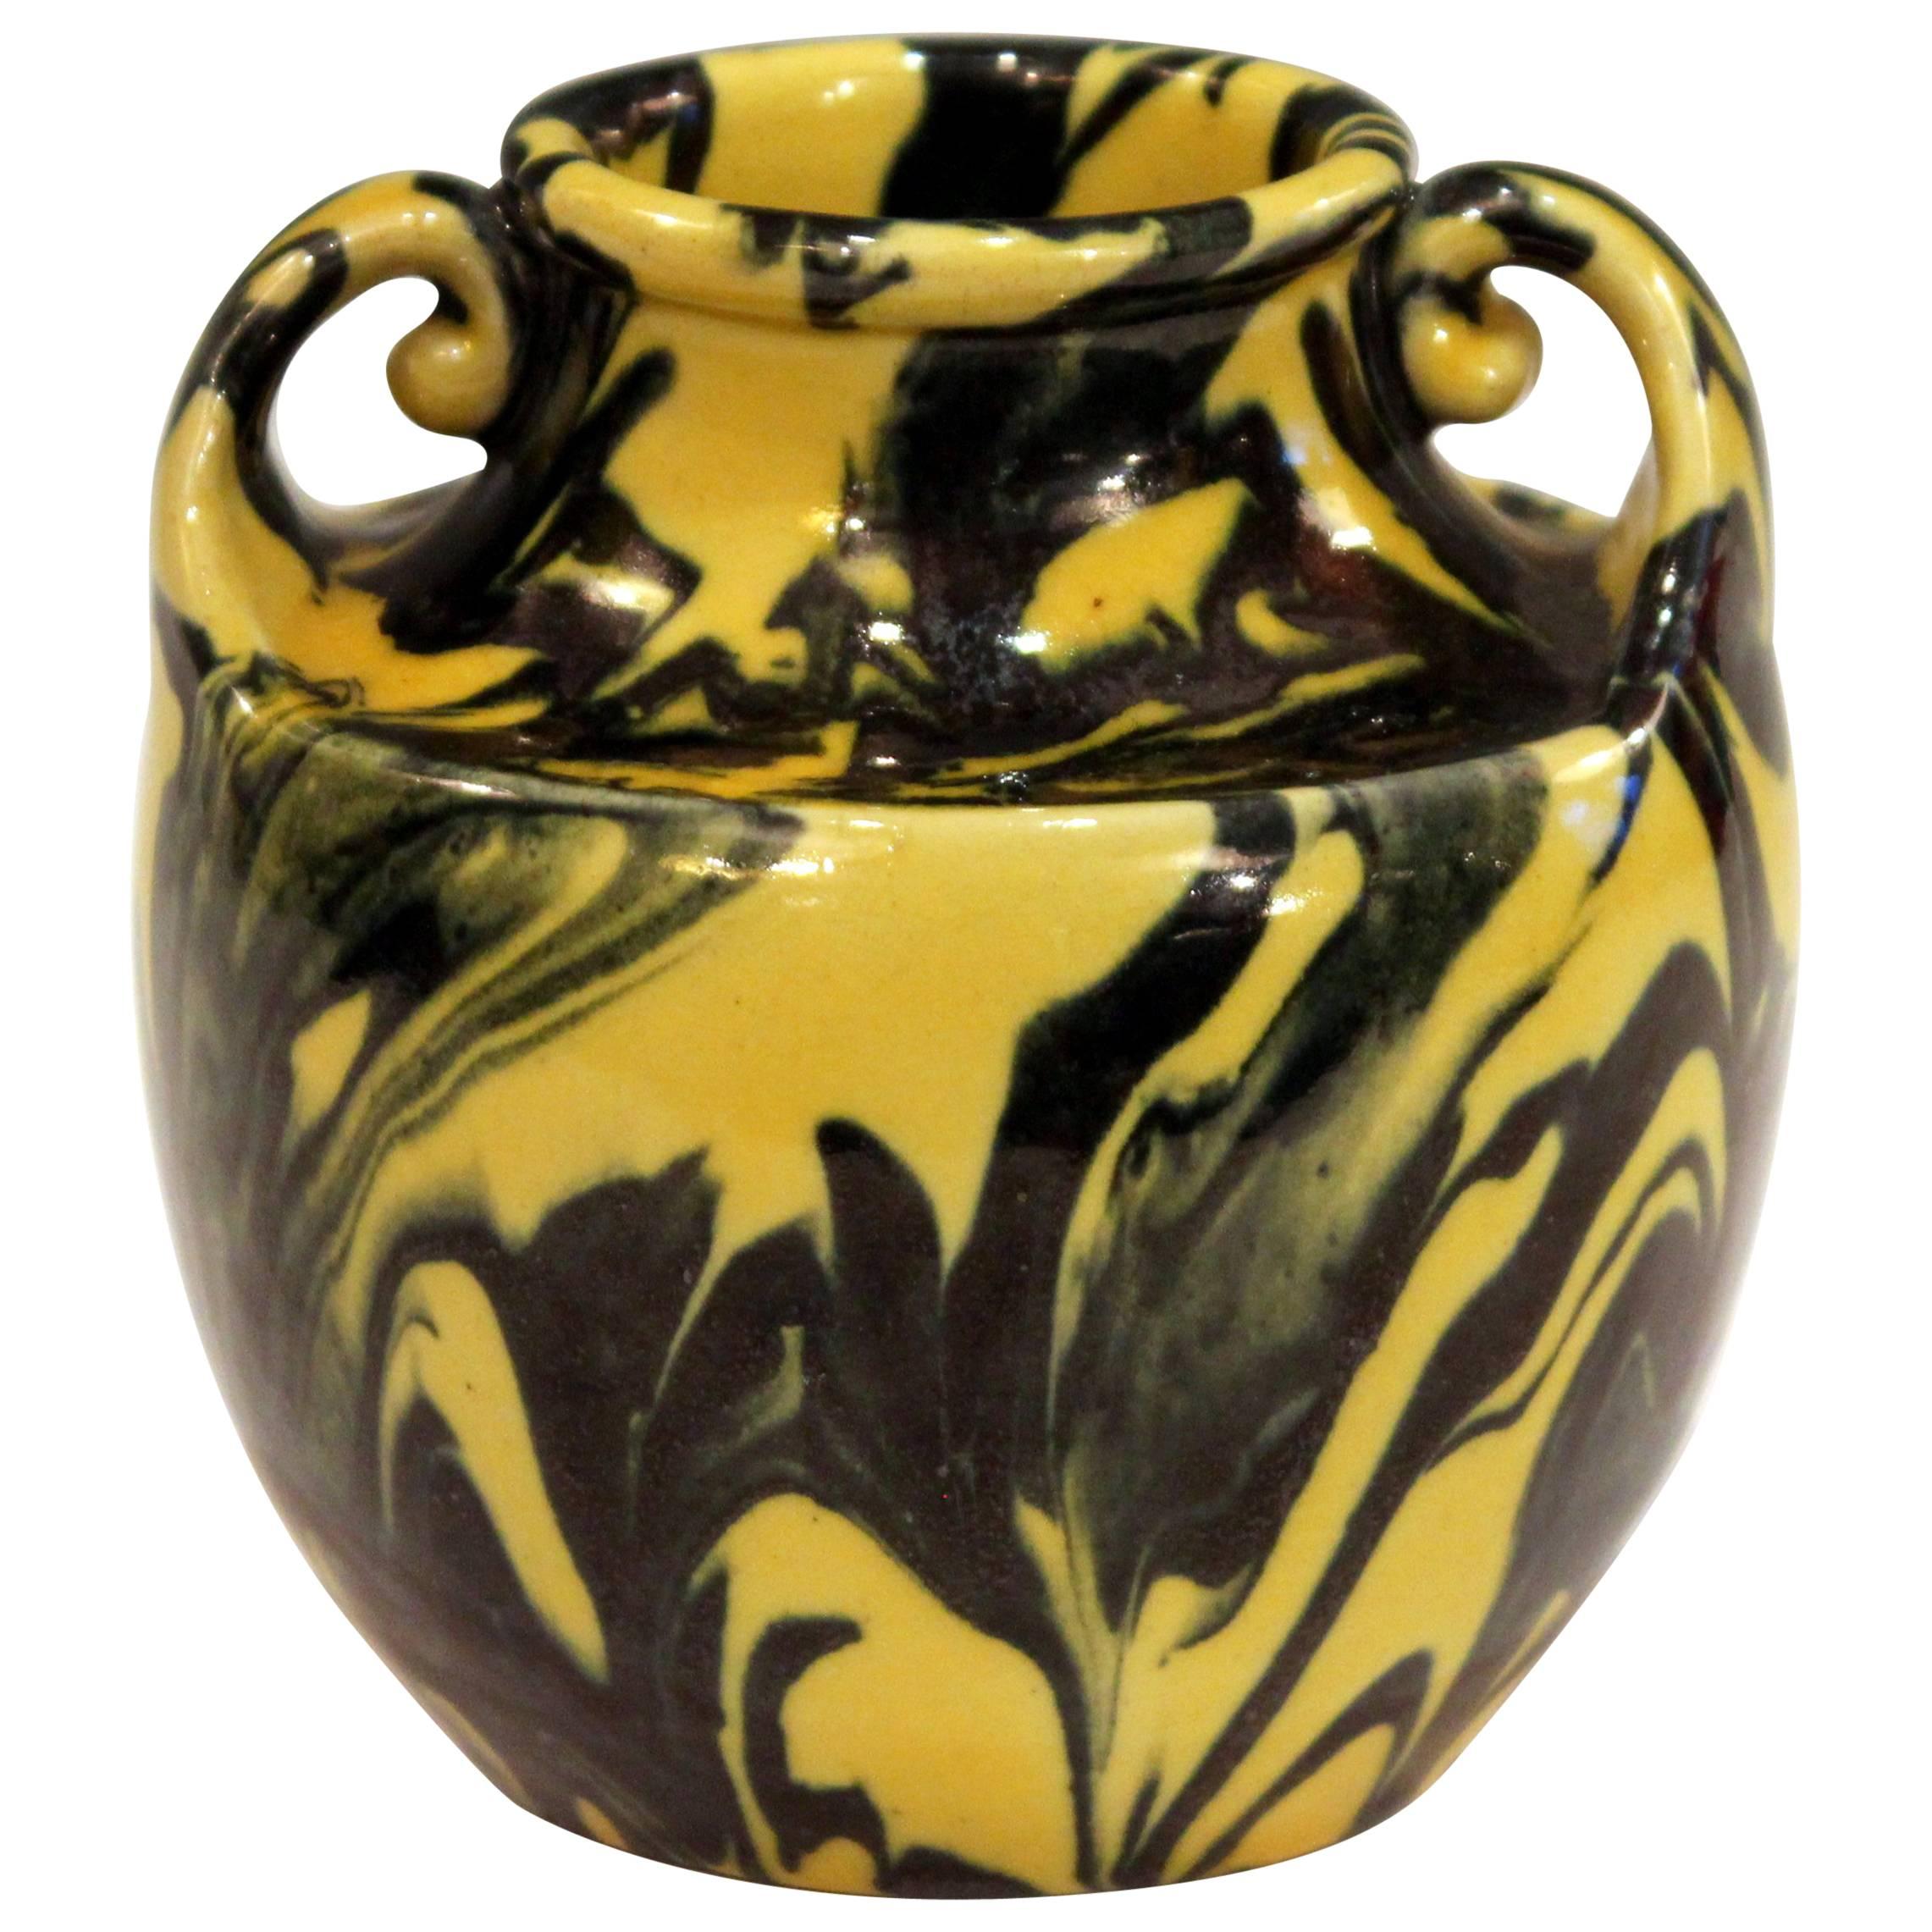 Awaji Pottery Art Deco Studio Japanese Marbled Metallic Yellow and Black Vase